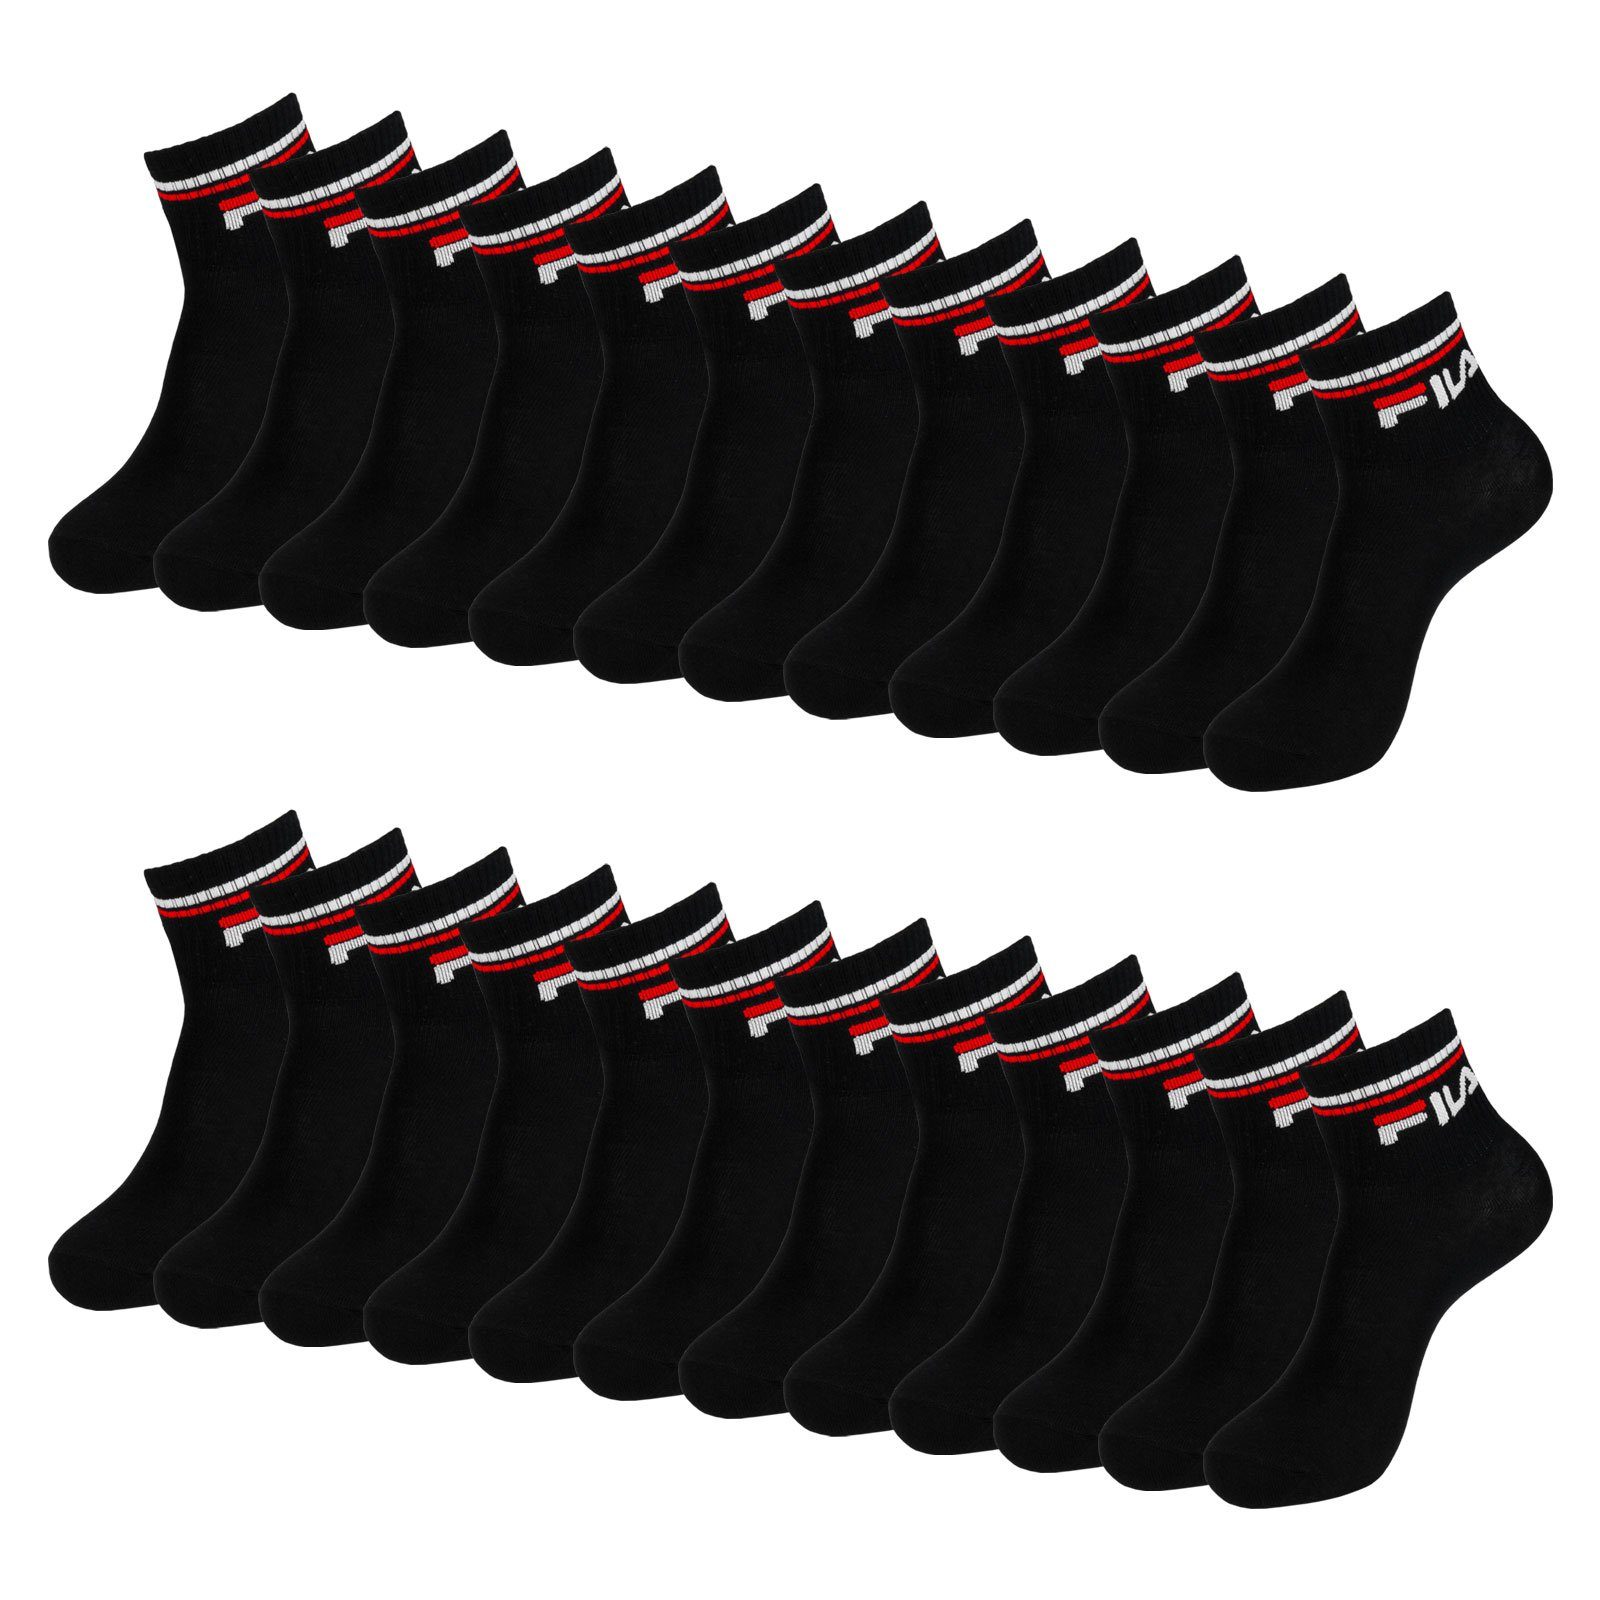 Rippbündchen mit Look Socks Fila 200 im Quarter sportlichen black Calza Kurzsocken (12-Paar)